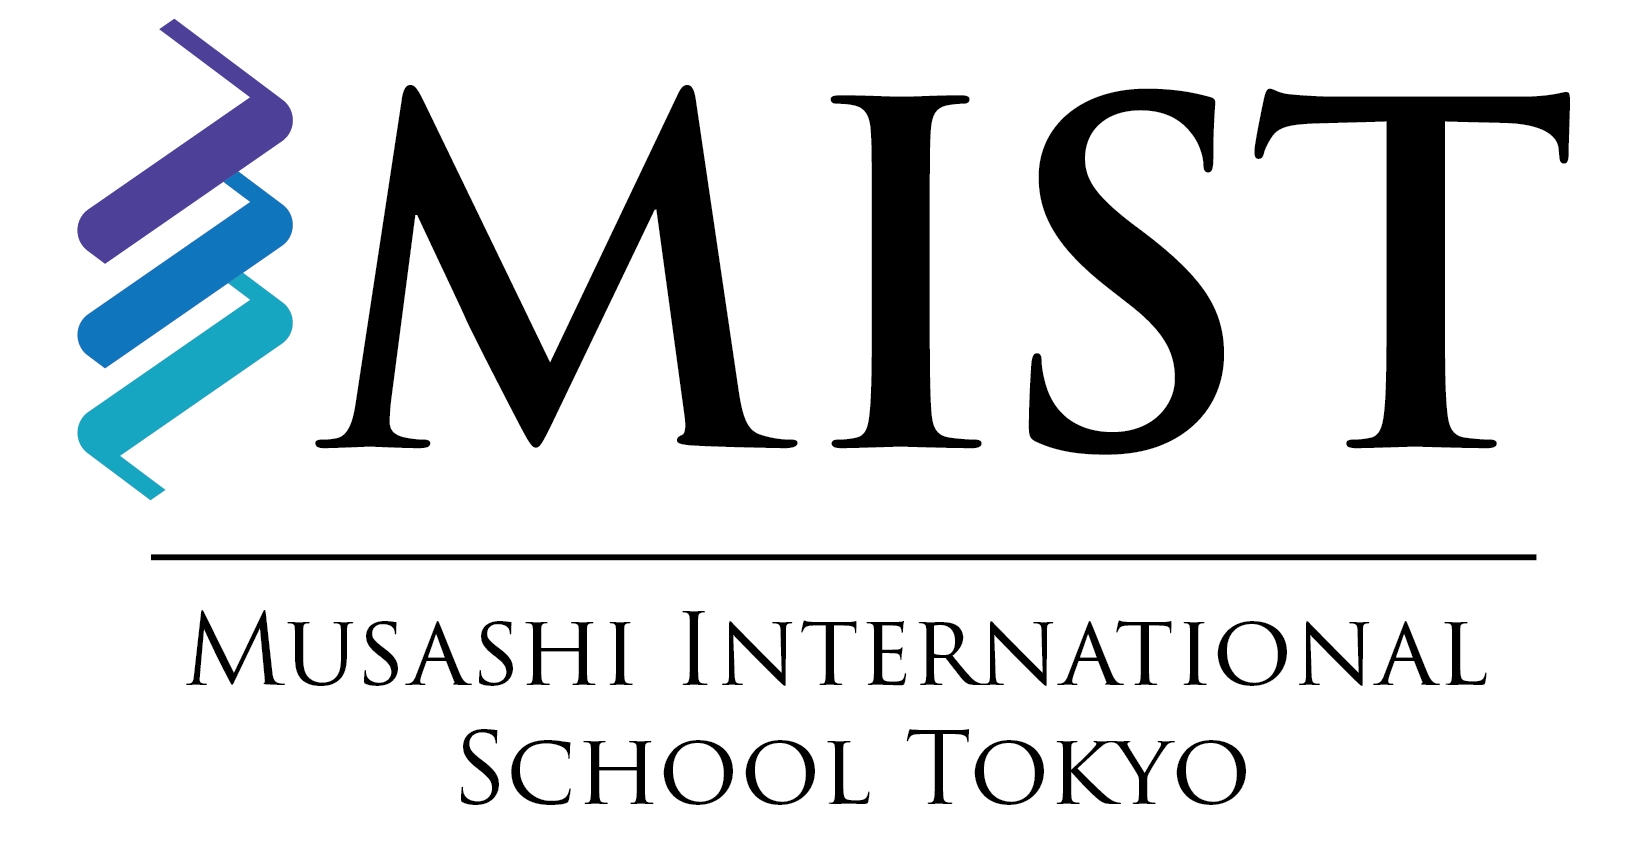 MUSASHI INTERNATIONAL SCHOOL TOKYO